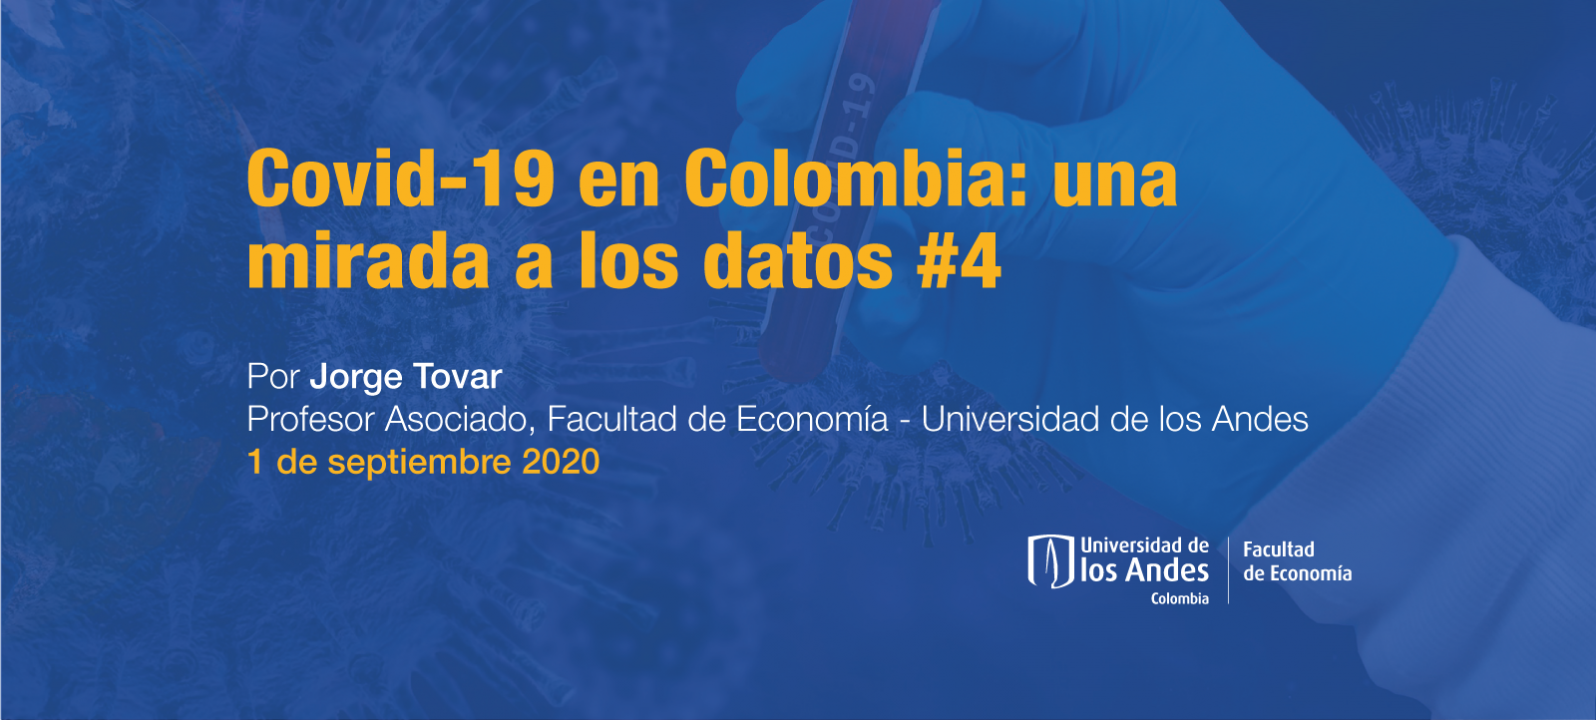 Covid-19-en-Colombia4.png